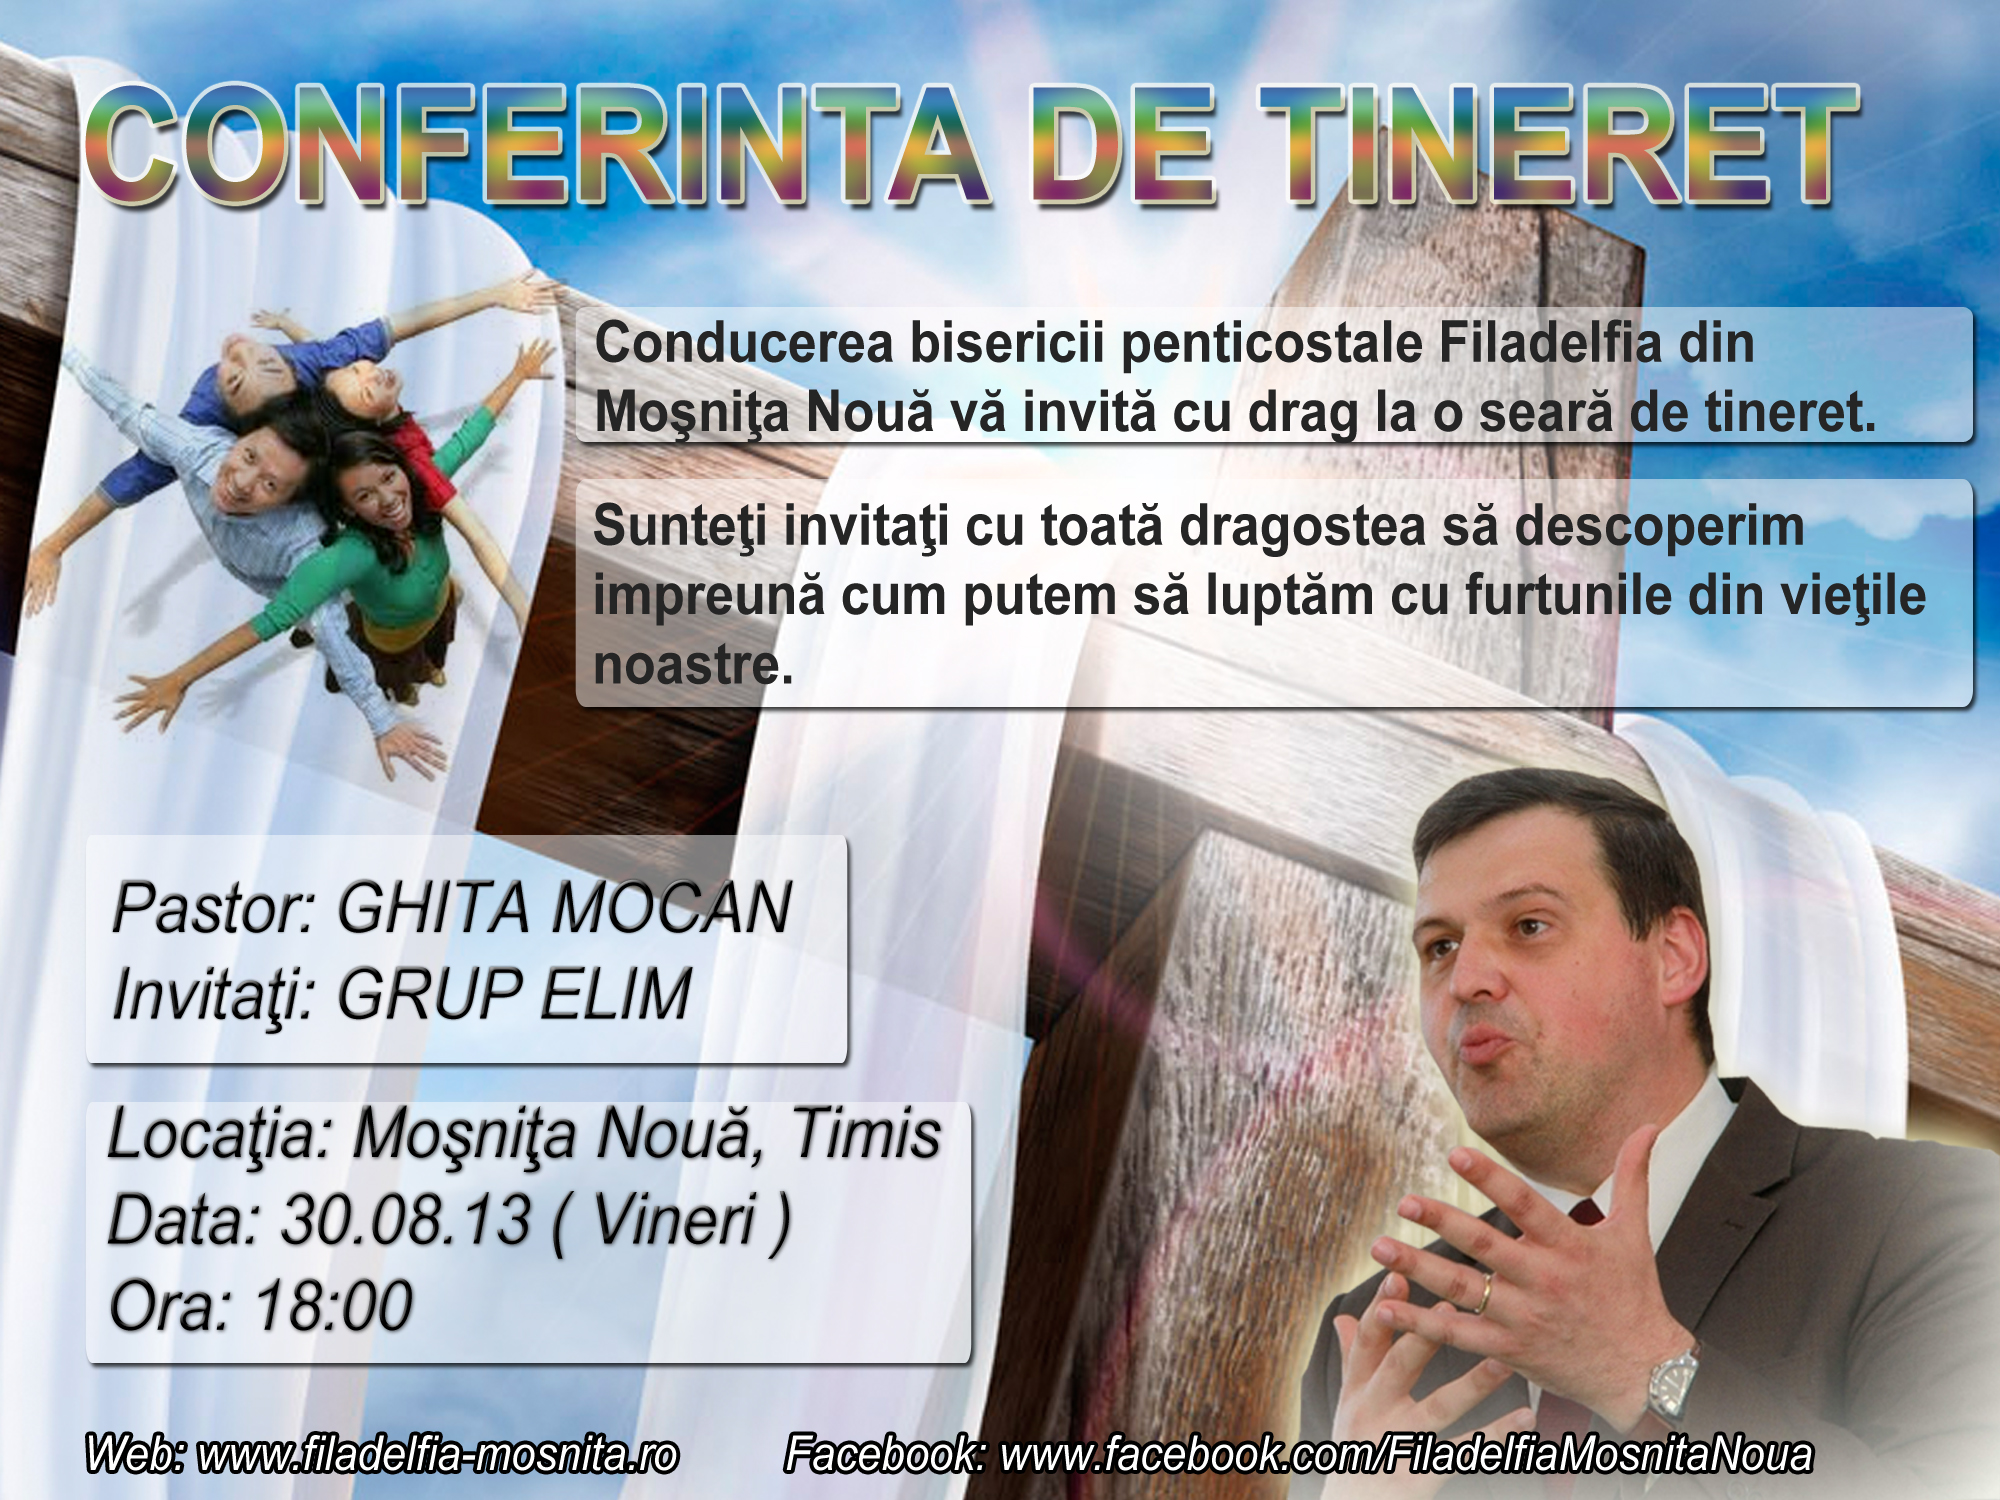 Conferință de tineret la Mosnita Noua, Timis - 30.08.13